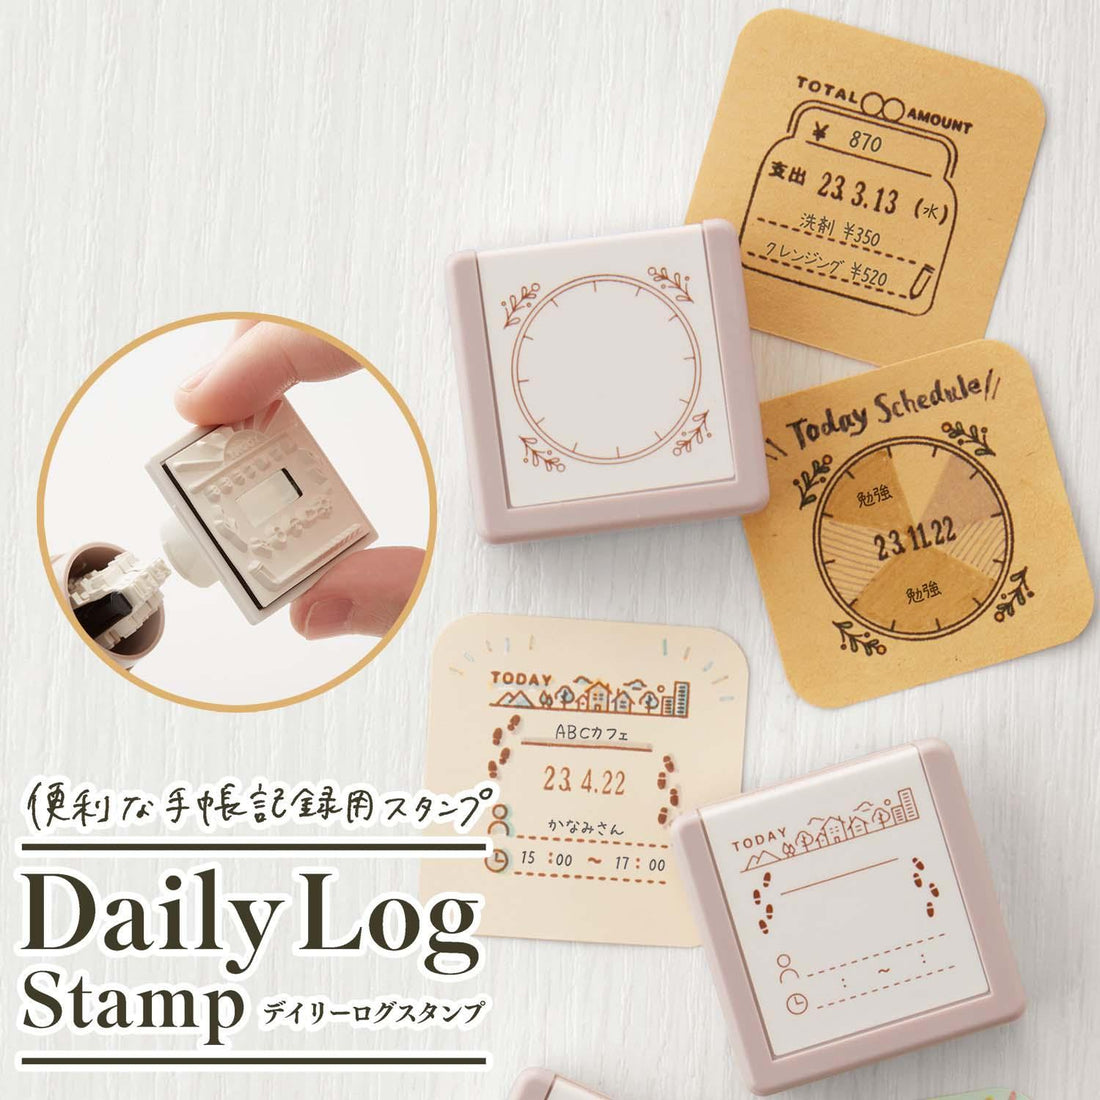 Daily Log Stamp - Reading Record - Techo Treats